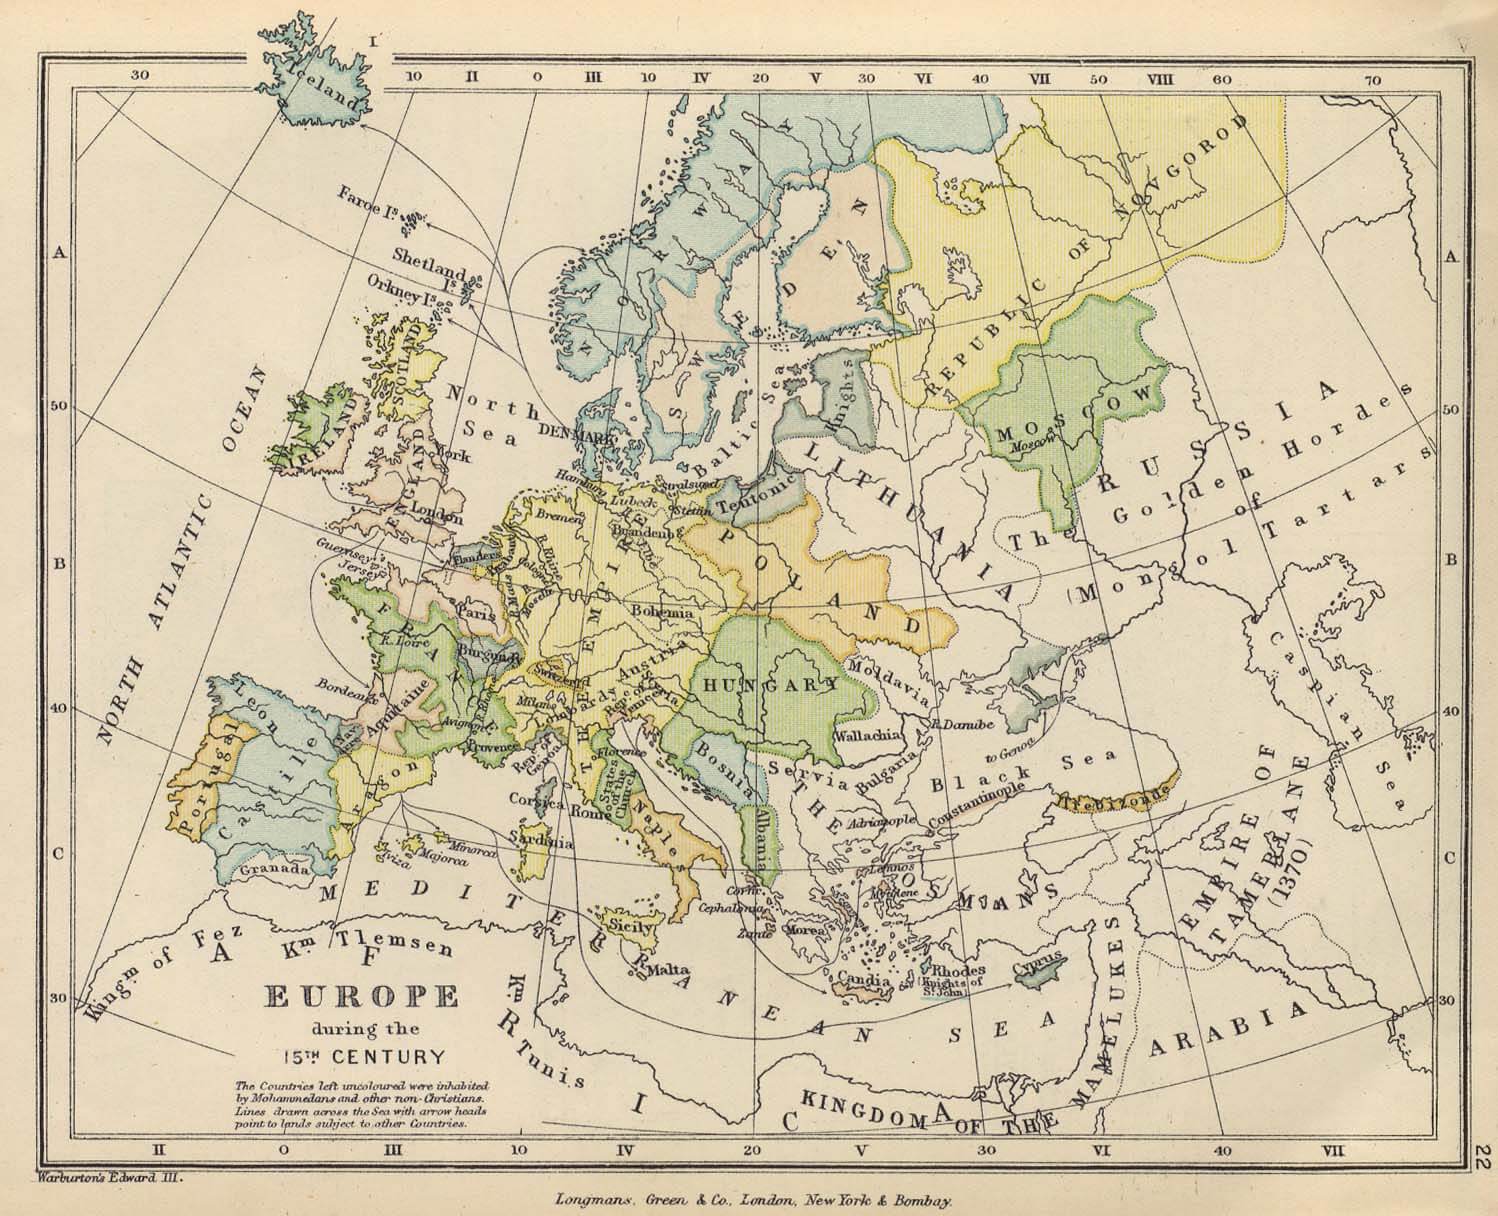 europa karte 15th jahrhuntert